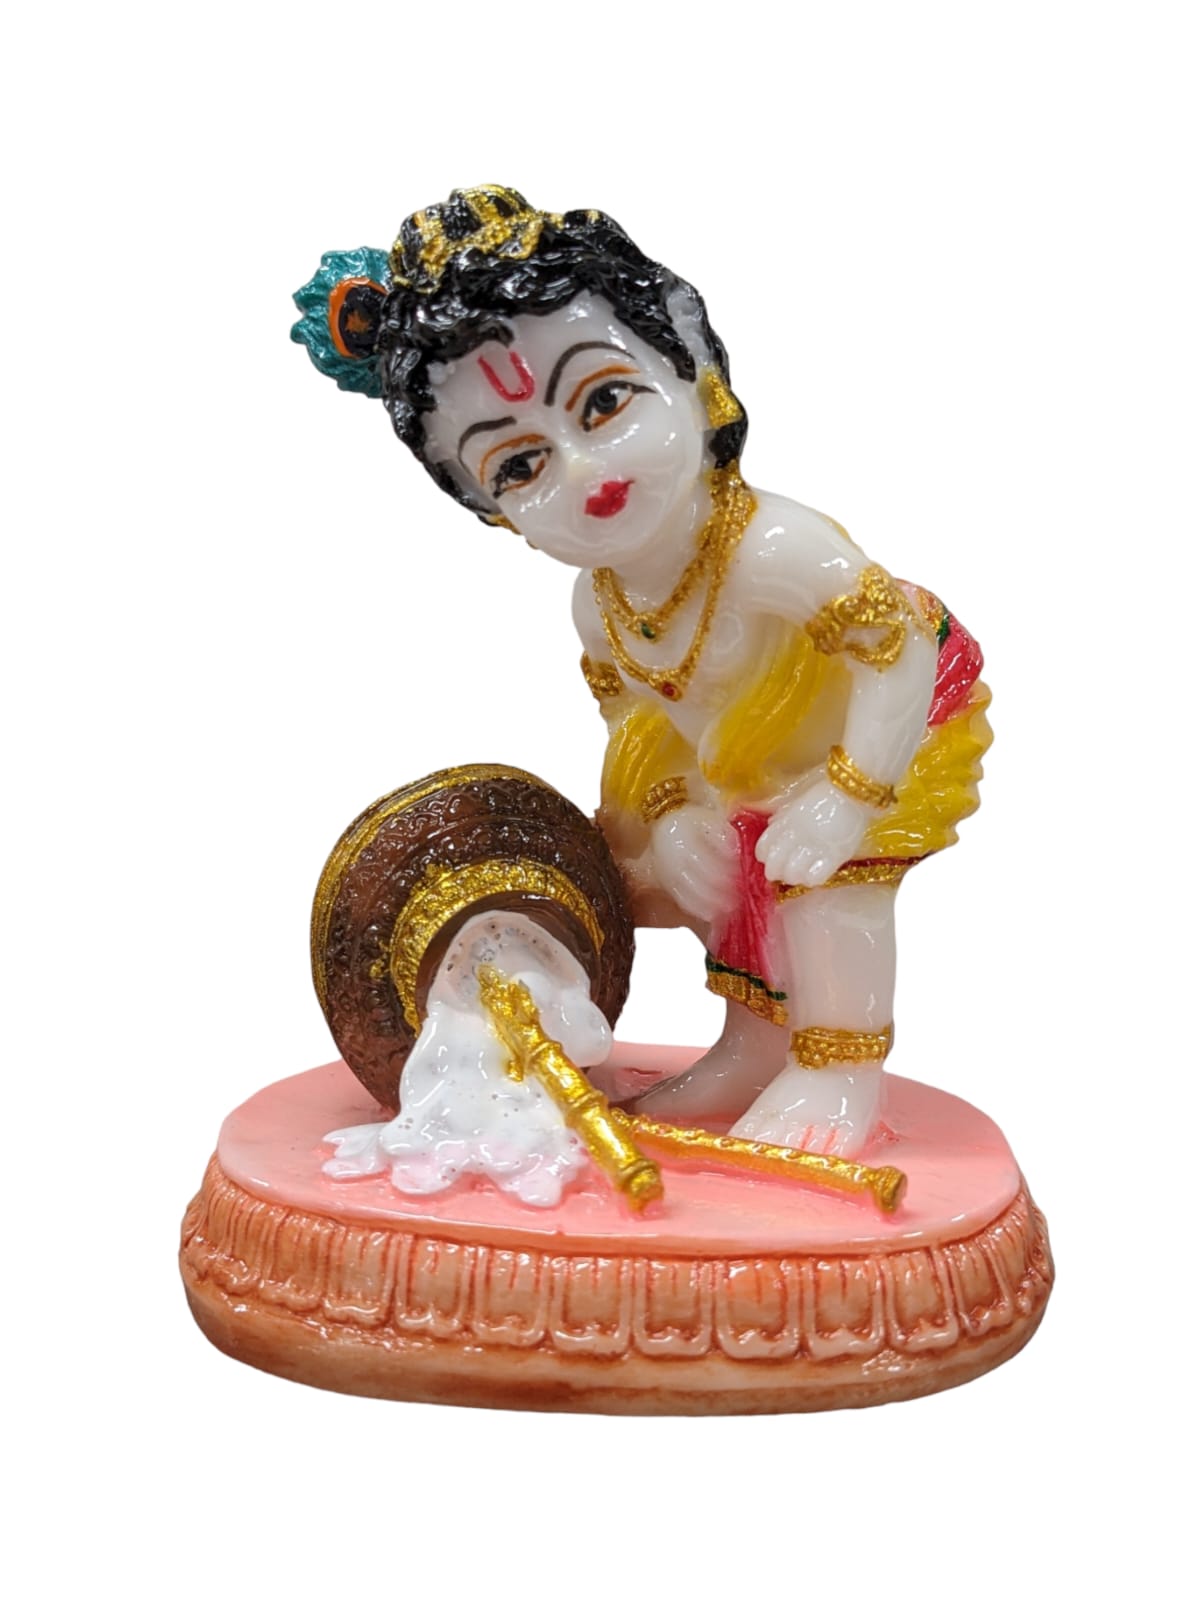 makhan chor krishna Idol - small statue of baby krishna